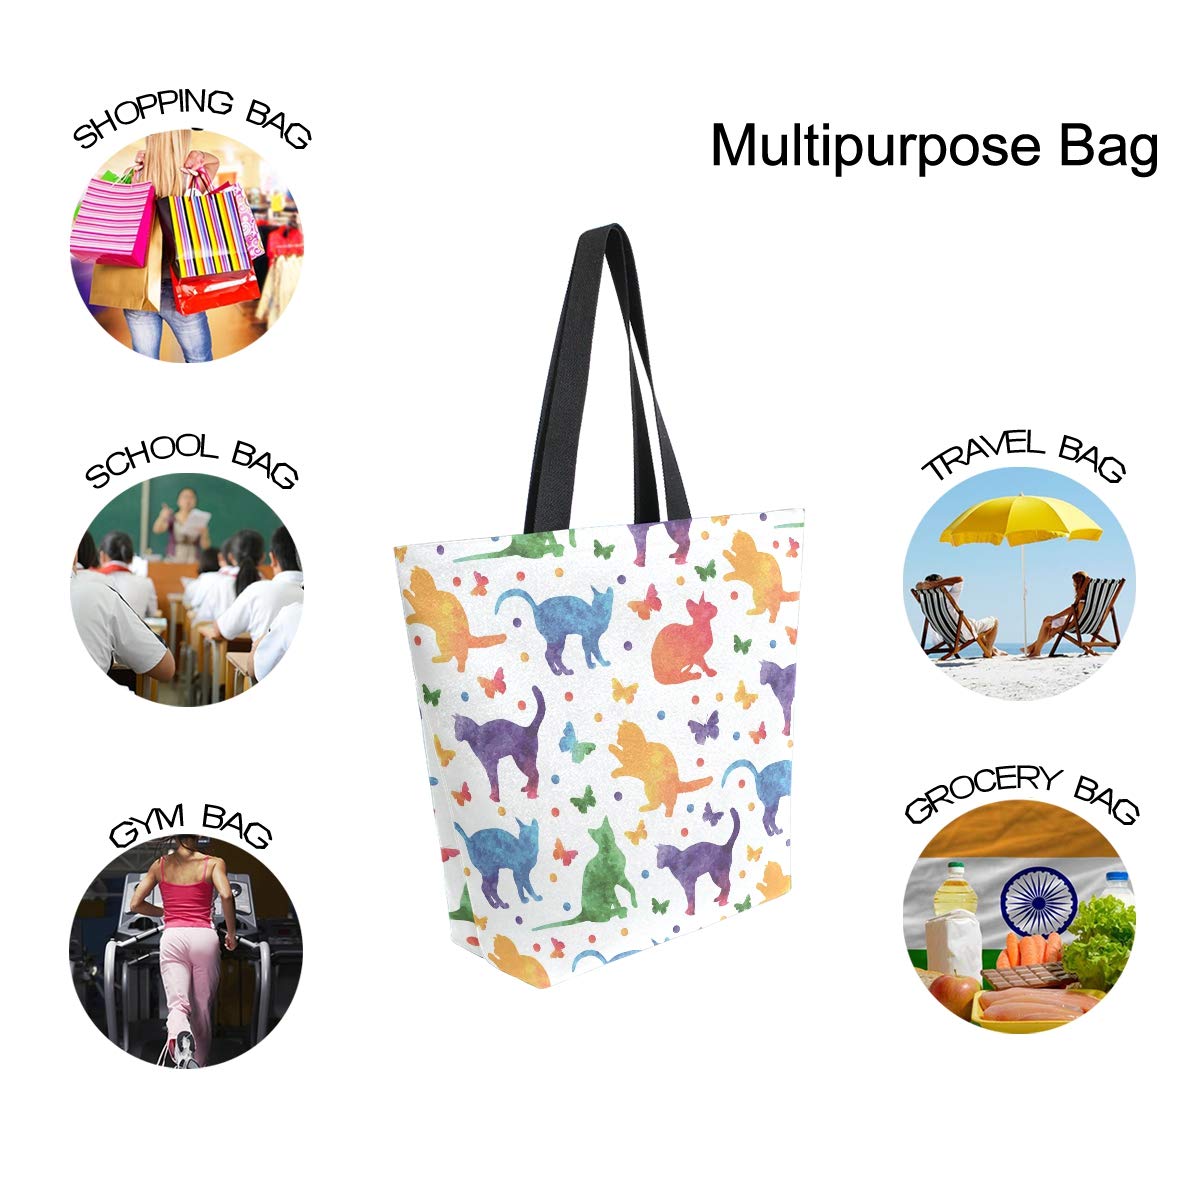 ALAZA Large Canvas Tote Bag Rainbow Cute Cat Butterflies Polka Dot Shopping Shoulder Handbag with Small Zippered Pocket